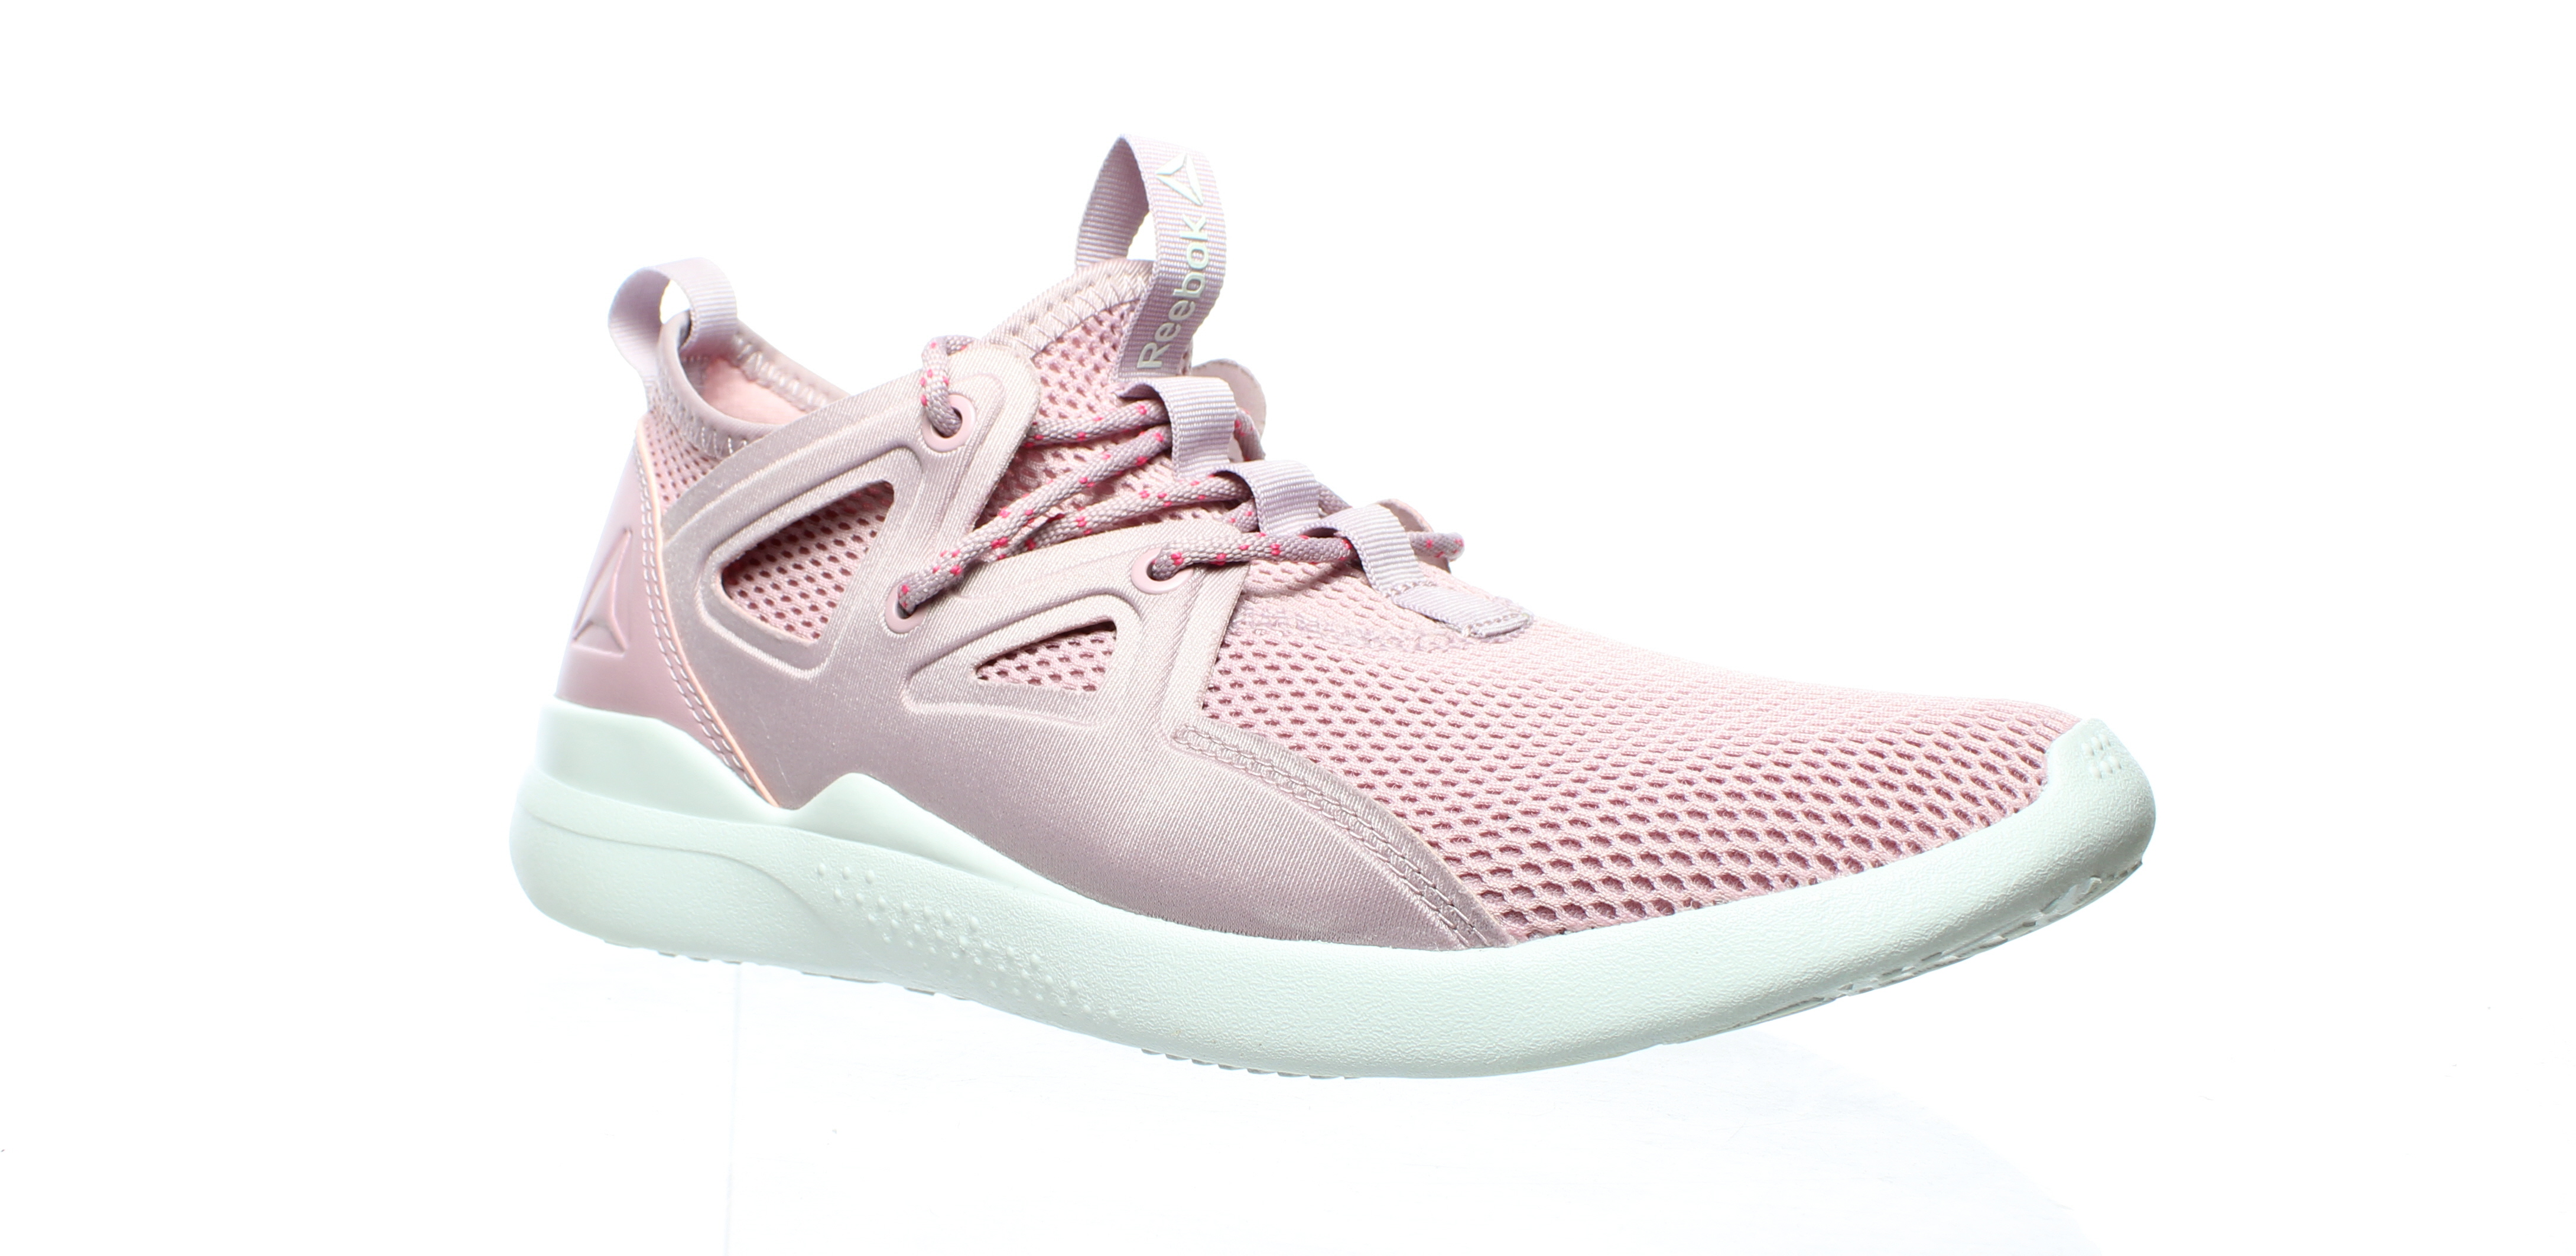 Jane Austen Vigilancia Federal Buy Reebok Womens Cardio Motion Pink Cross Training Shoes Size 8 Online at  Lowest Price in Ubuy Bahrain. 266256140